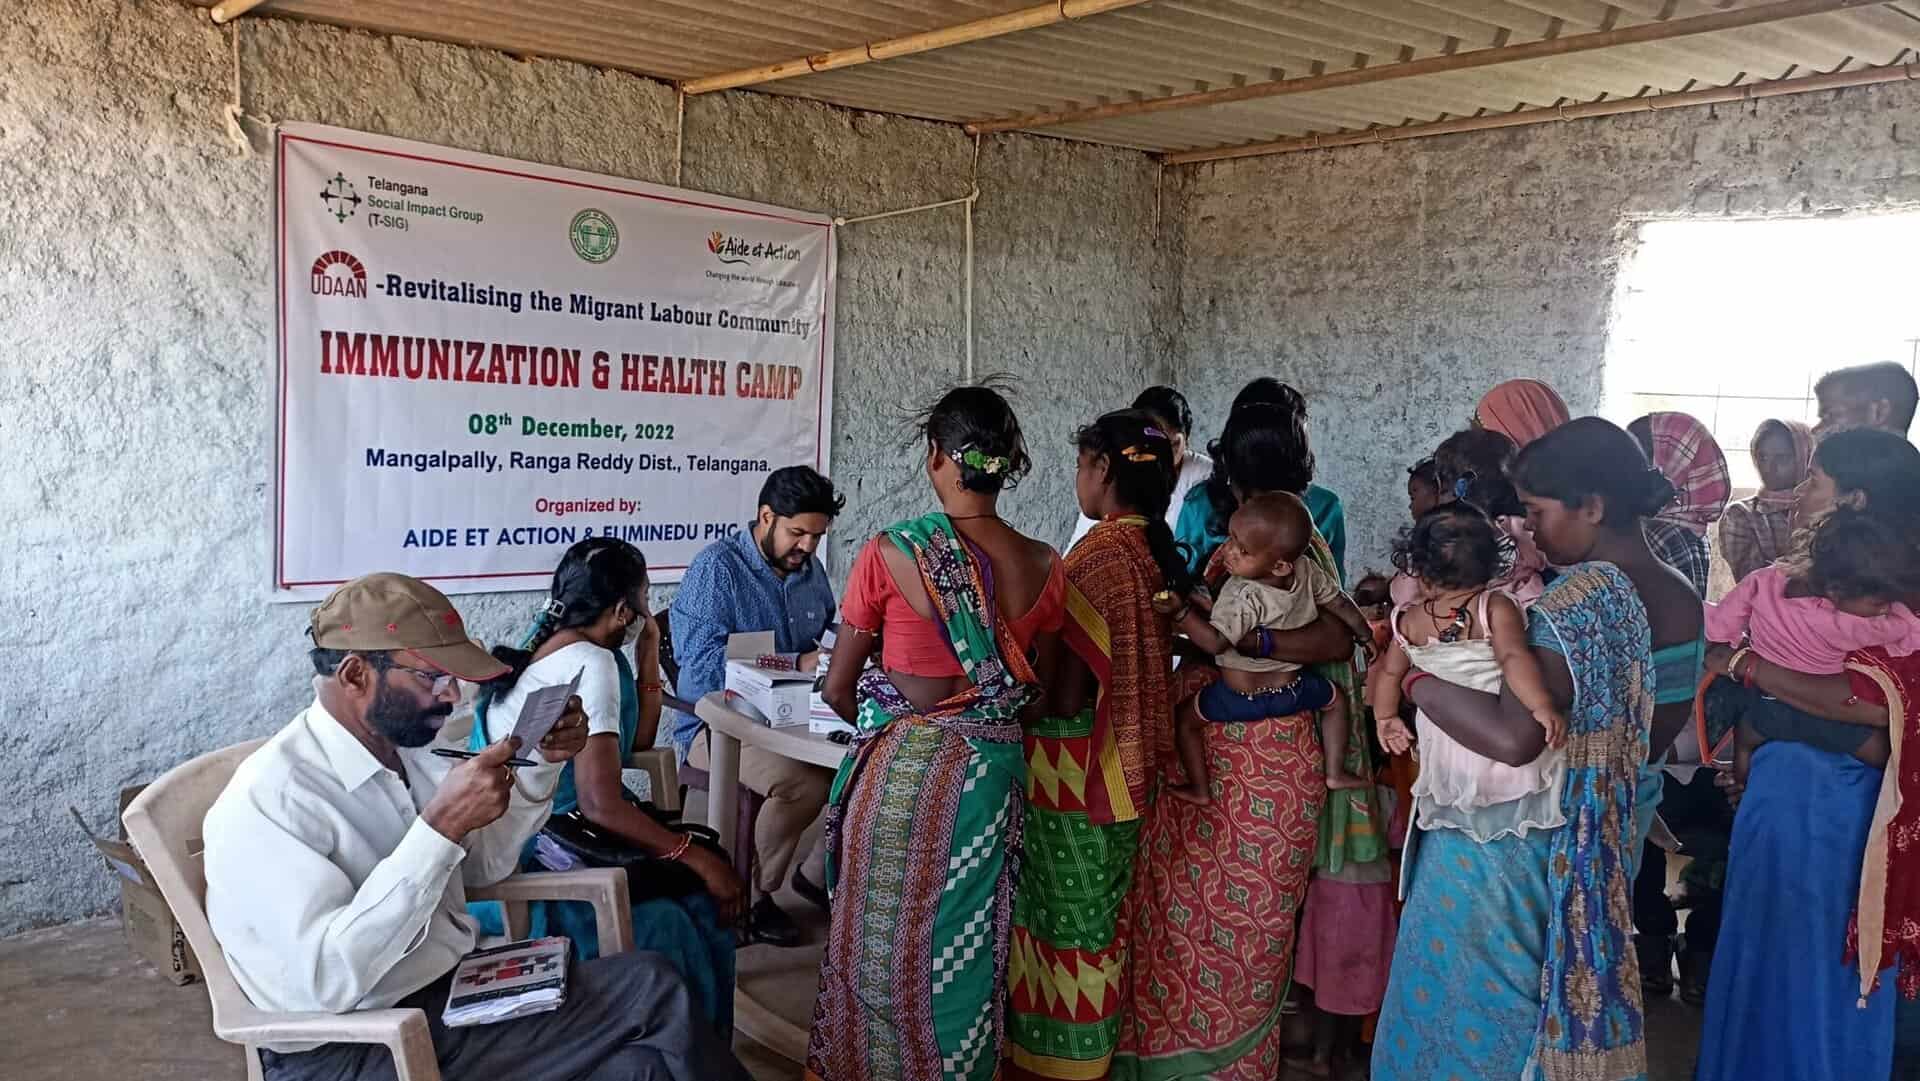 Health camp at a brickworks site in Telangana, India